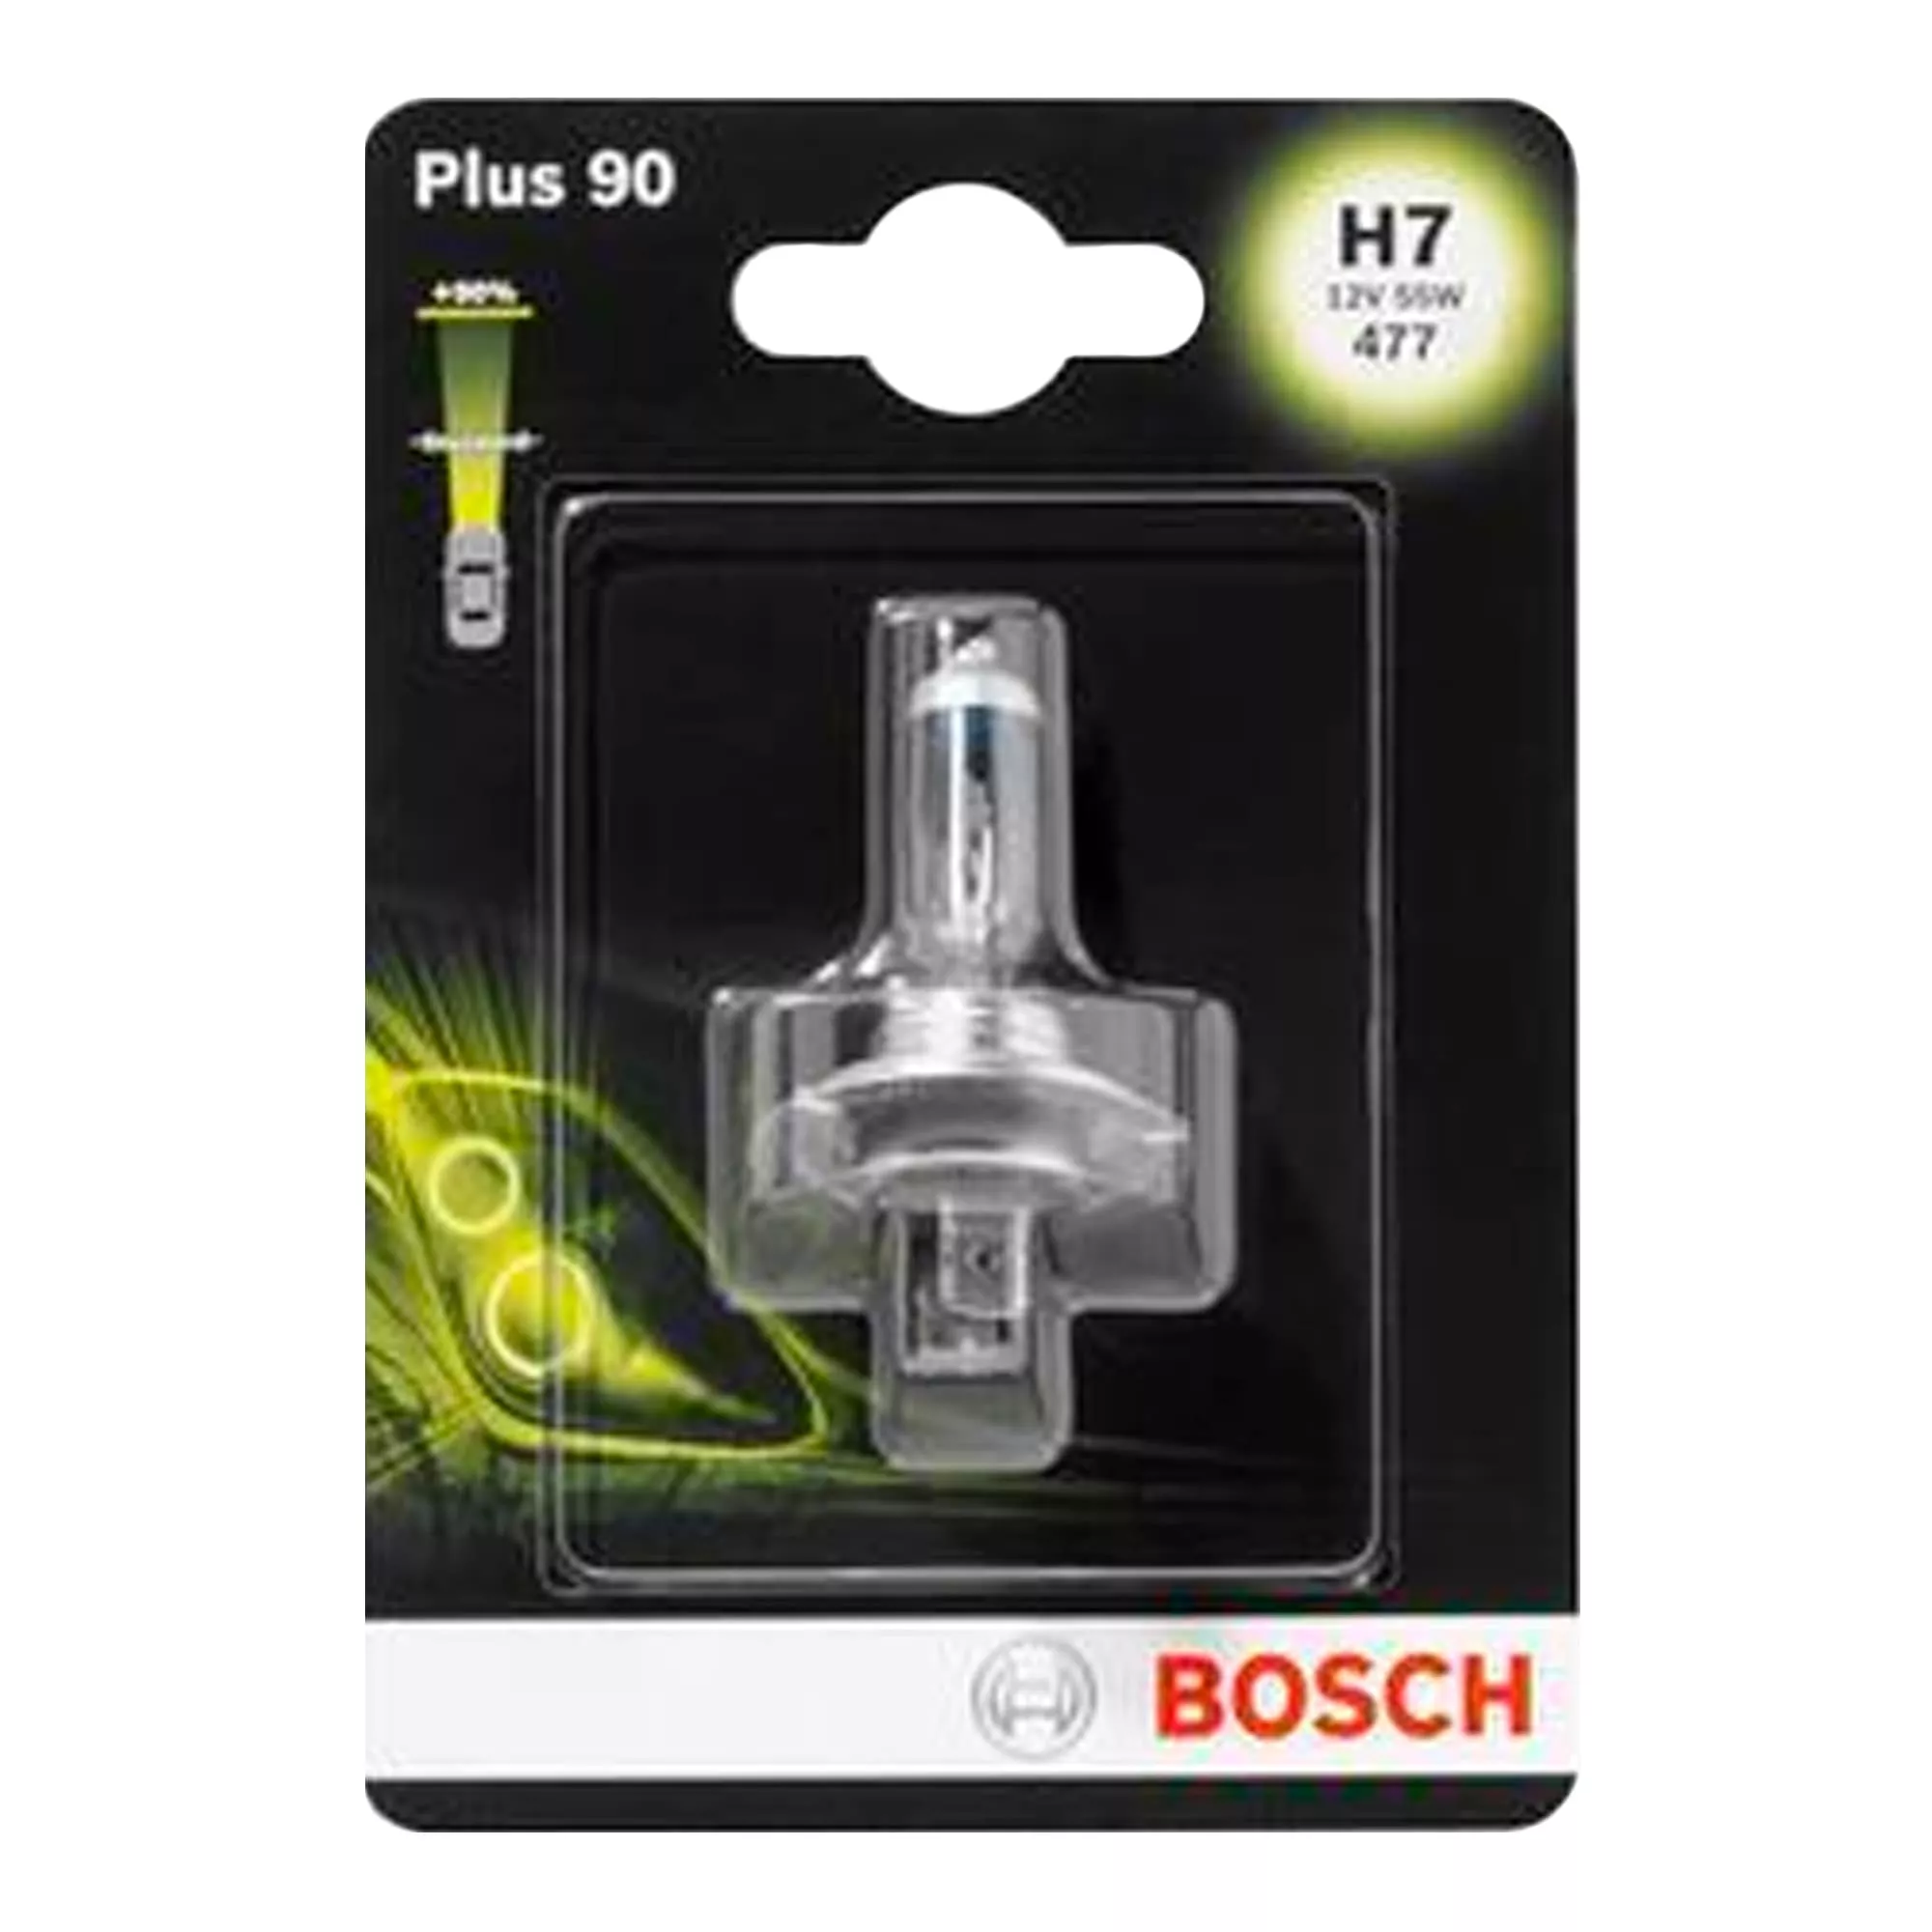 Лампа Bosch Plus 90 H7 12V 55W 1 987 301 078